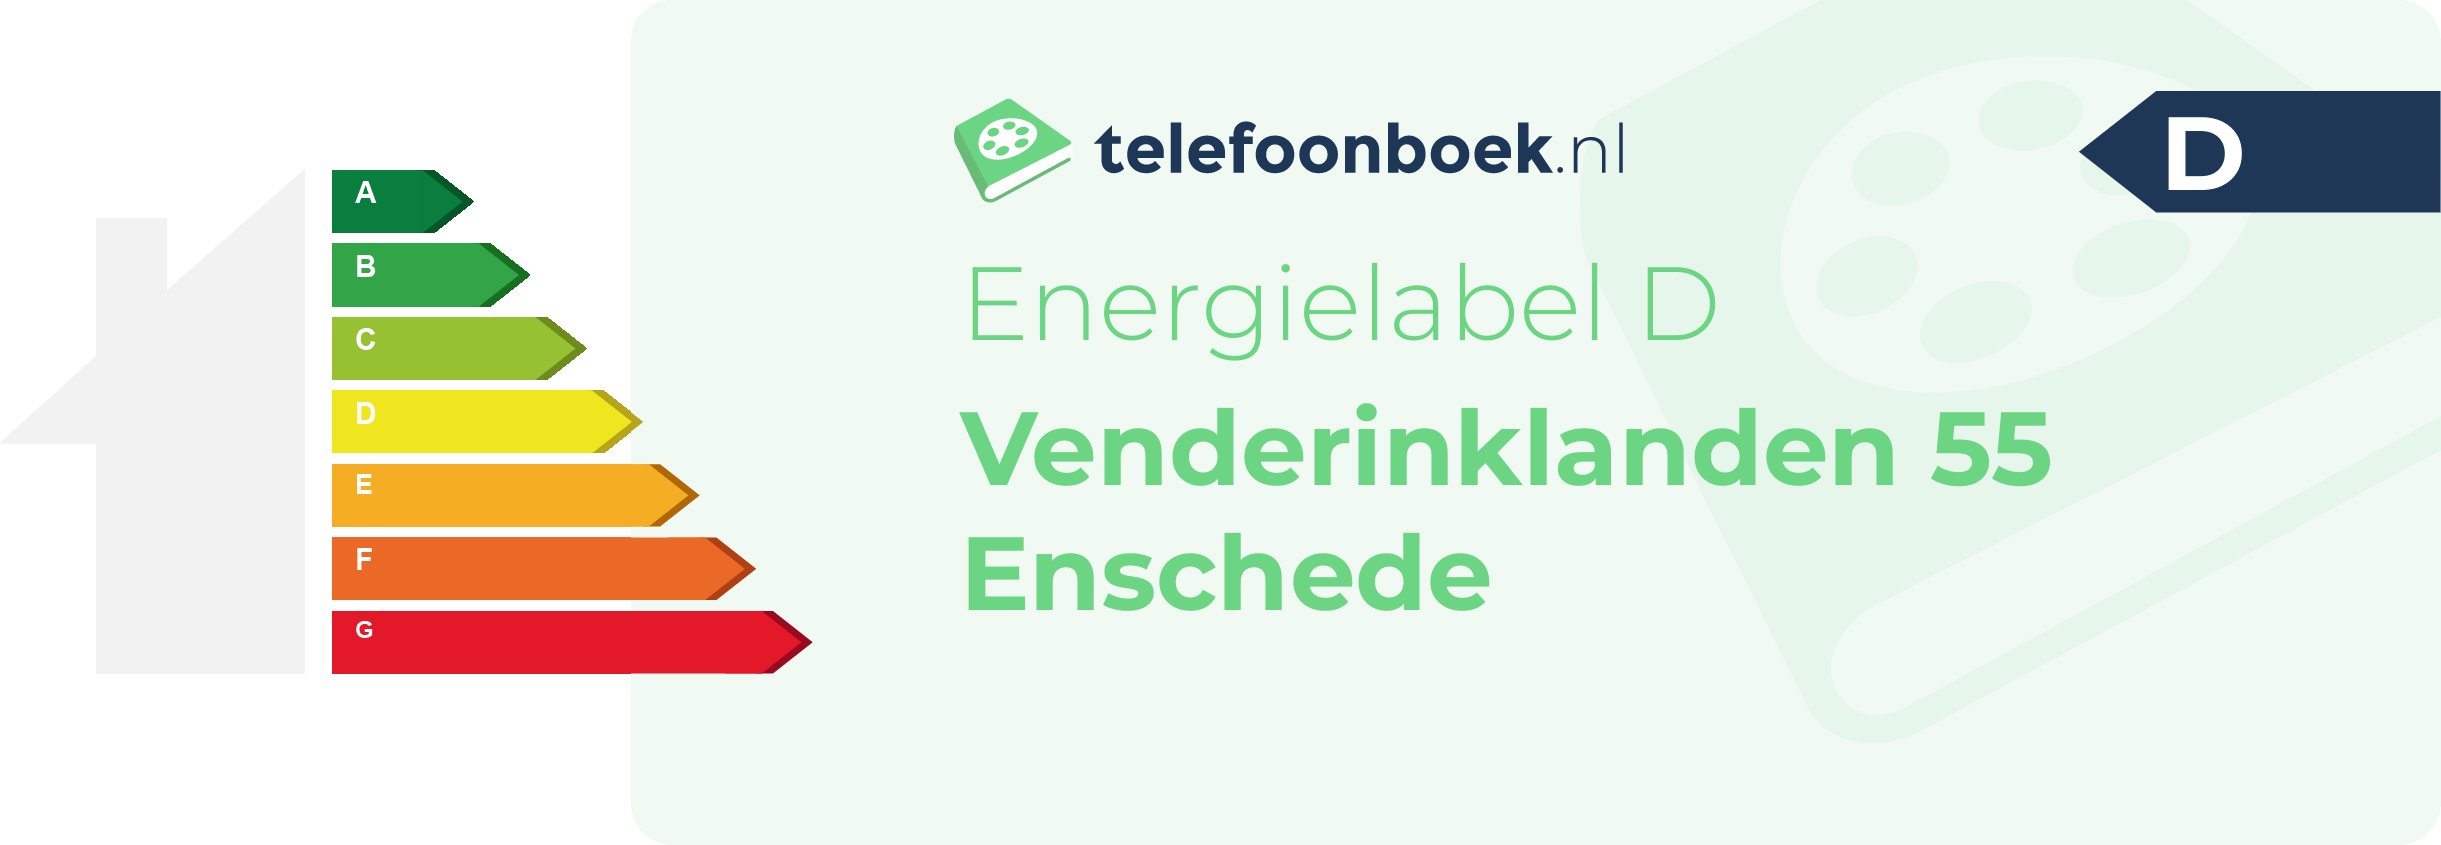 Energielabel Venderinklanden 55 Enschede